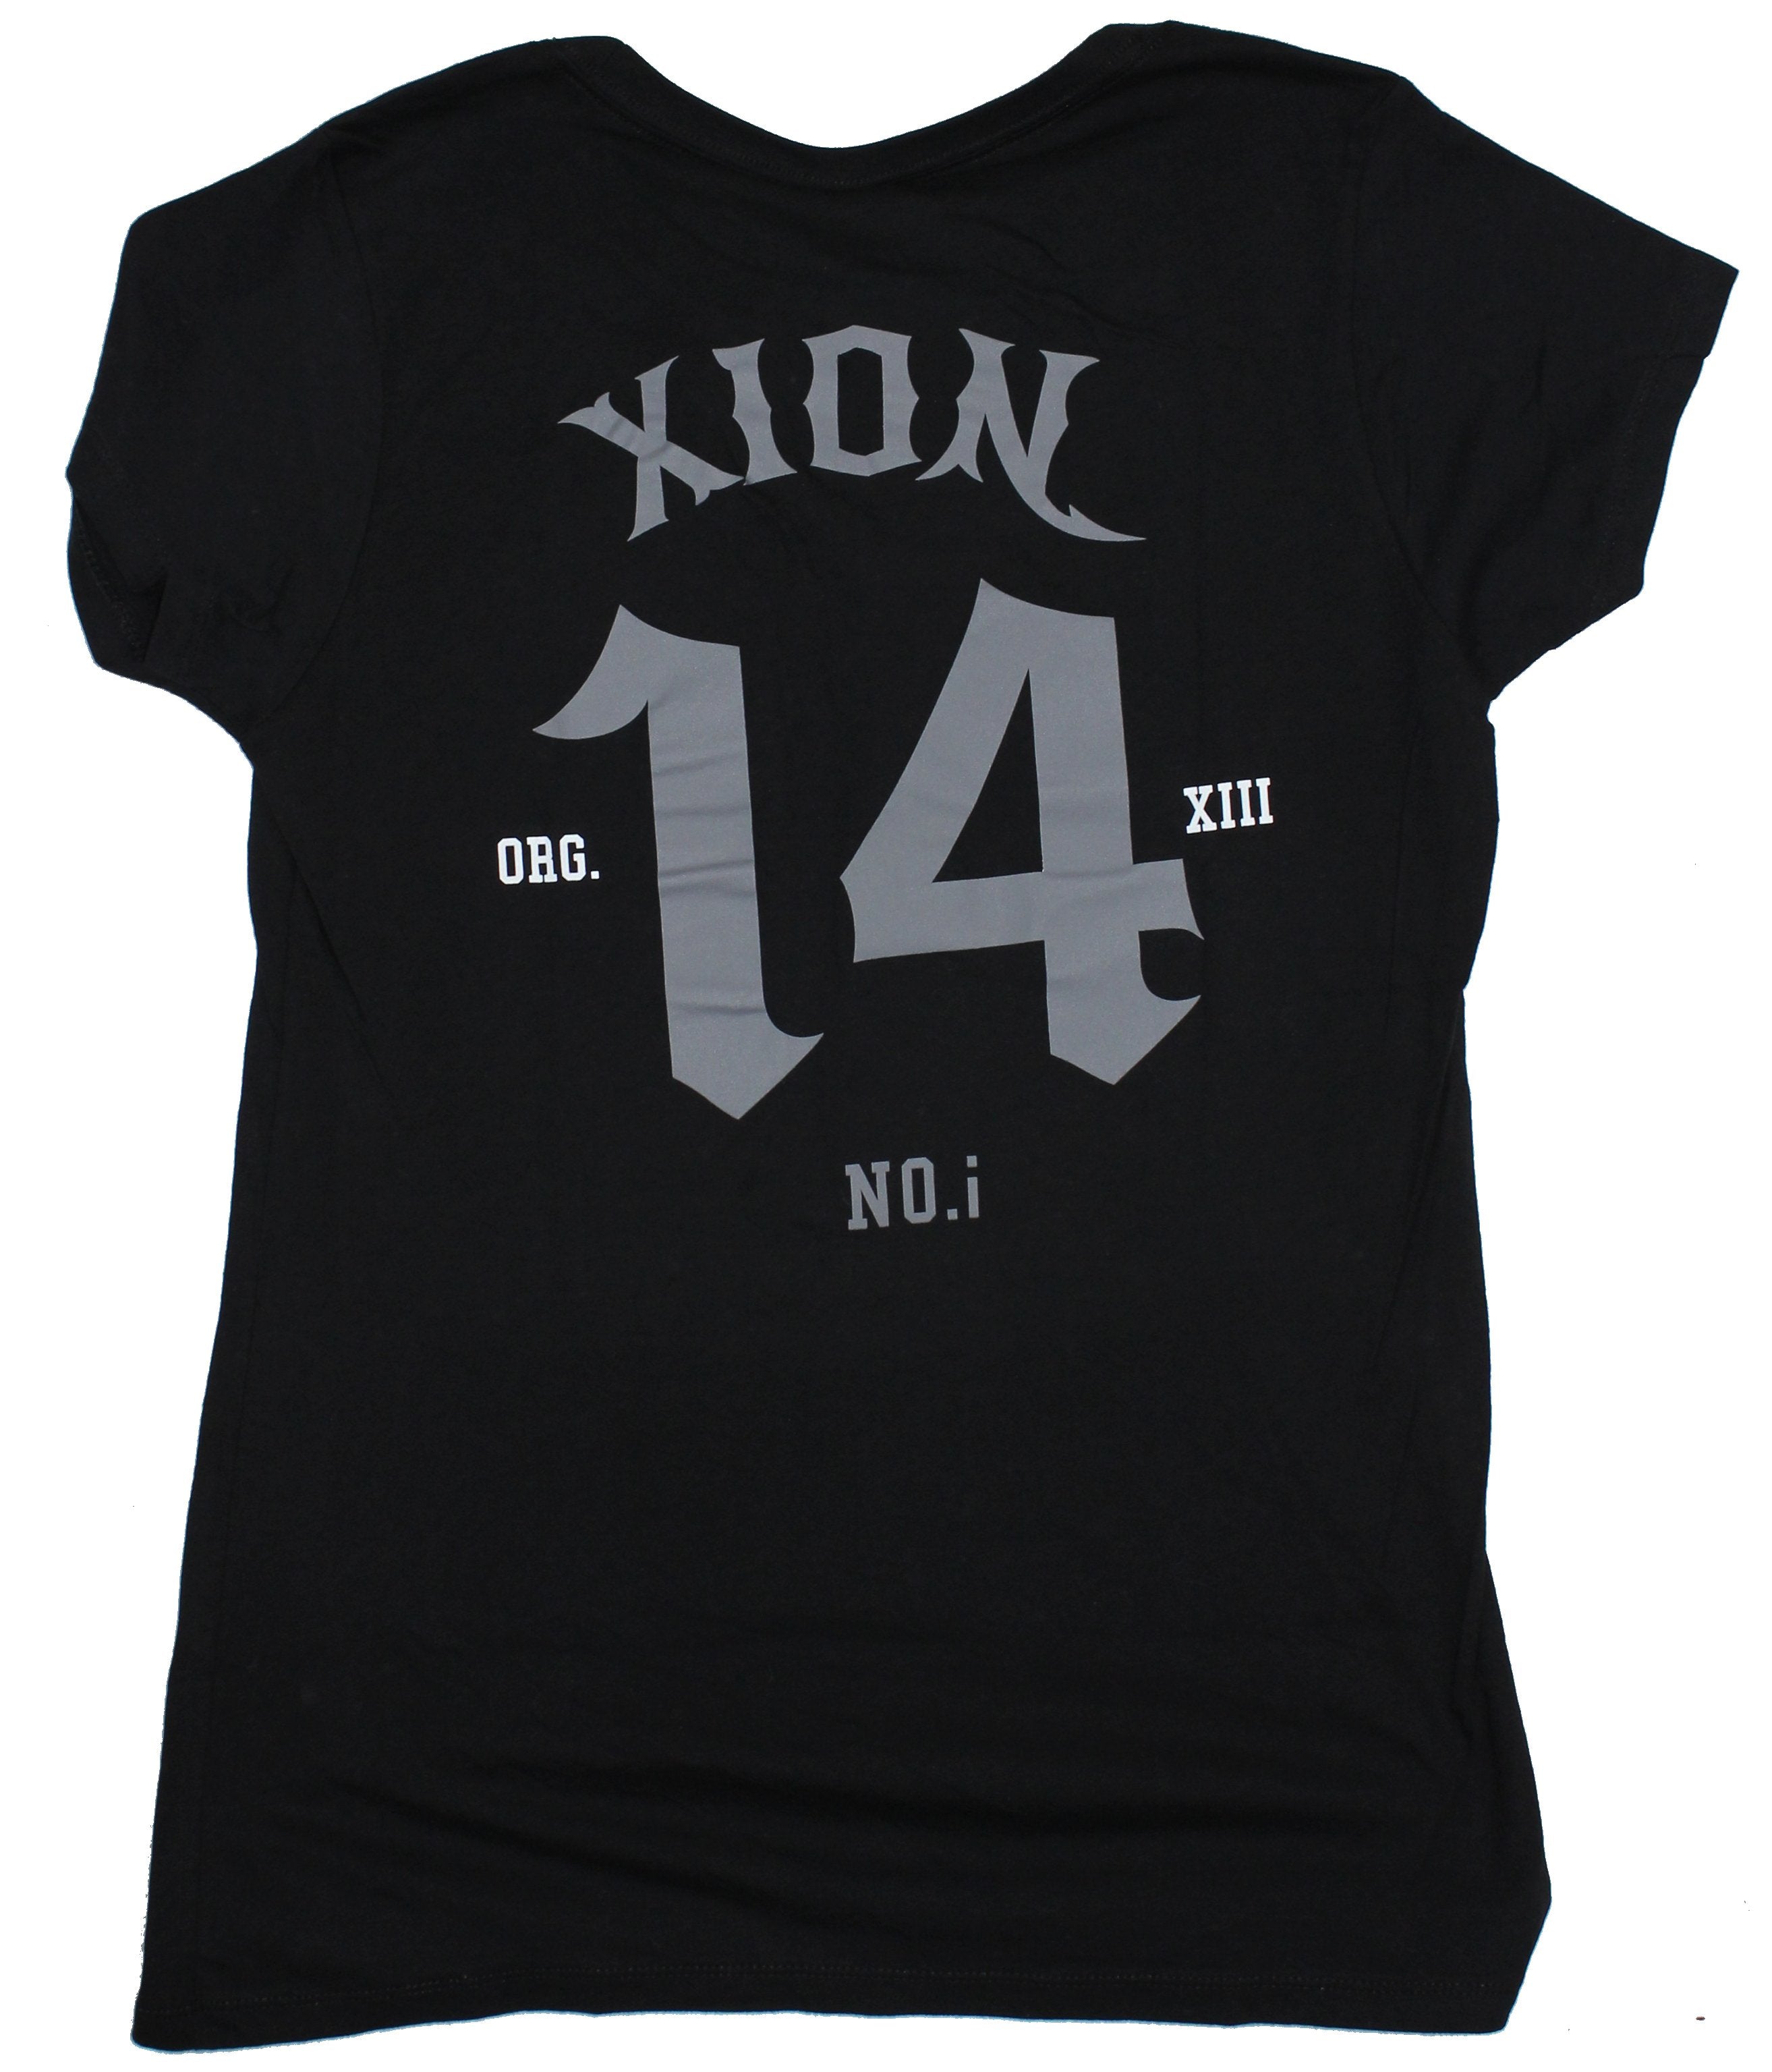 Kingdom Hearts Girls Juniors T-Shirt - Xion 14 Jersey Key 2 Sided Image